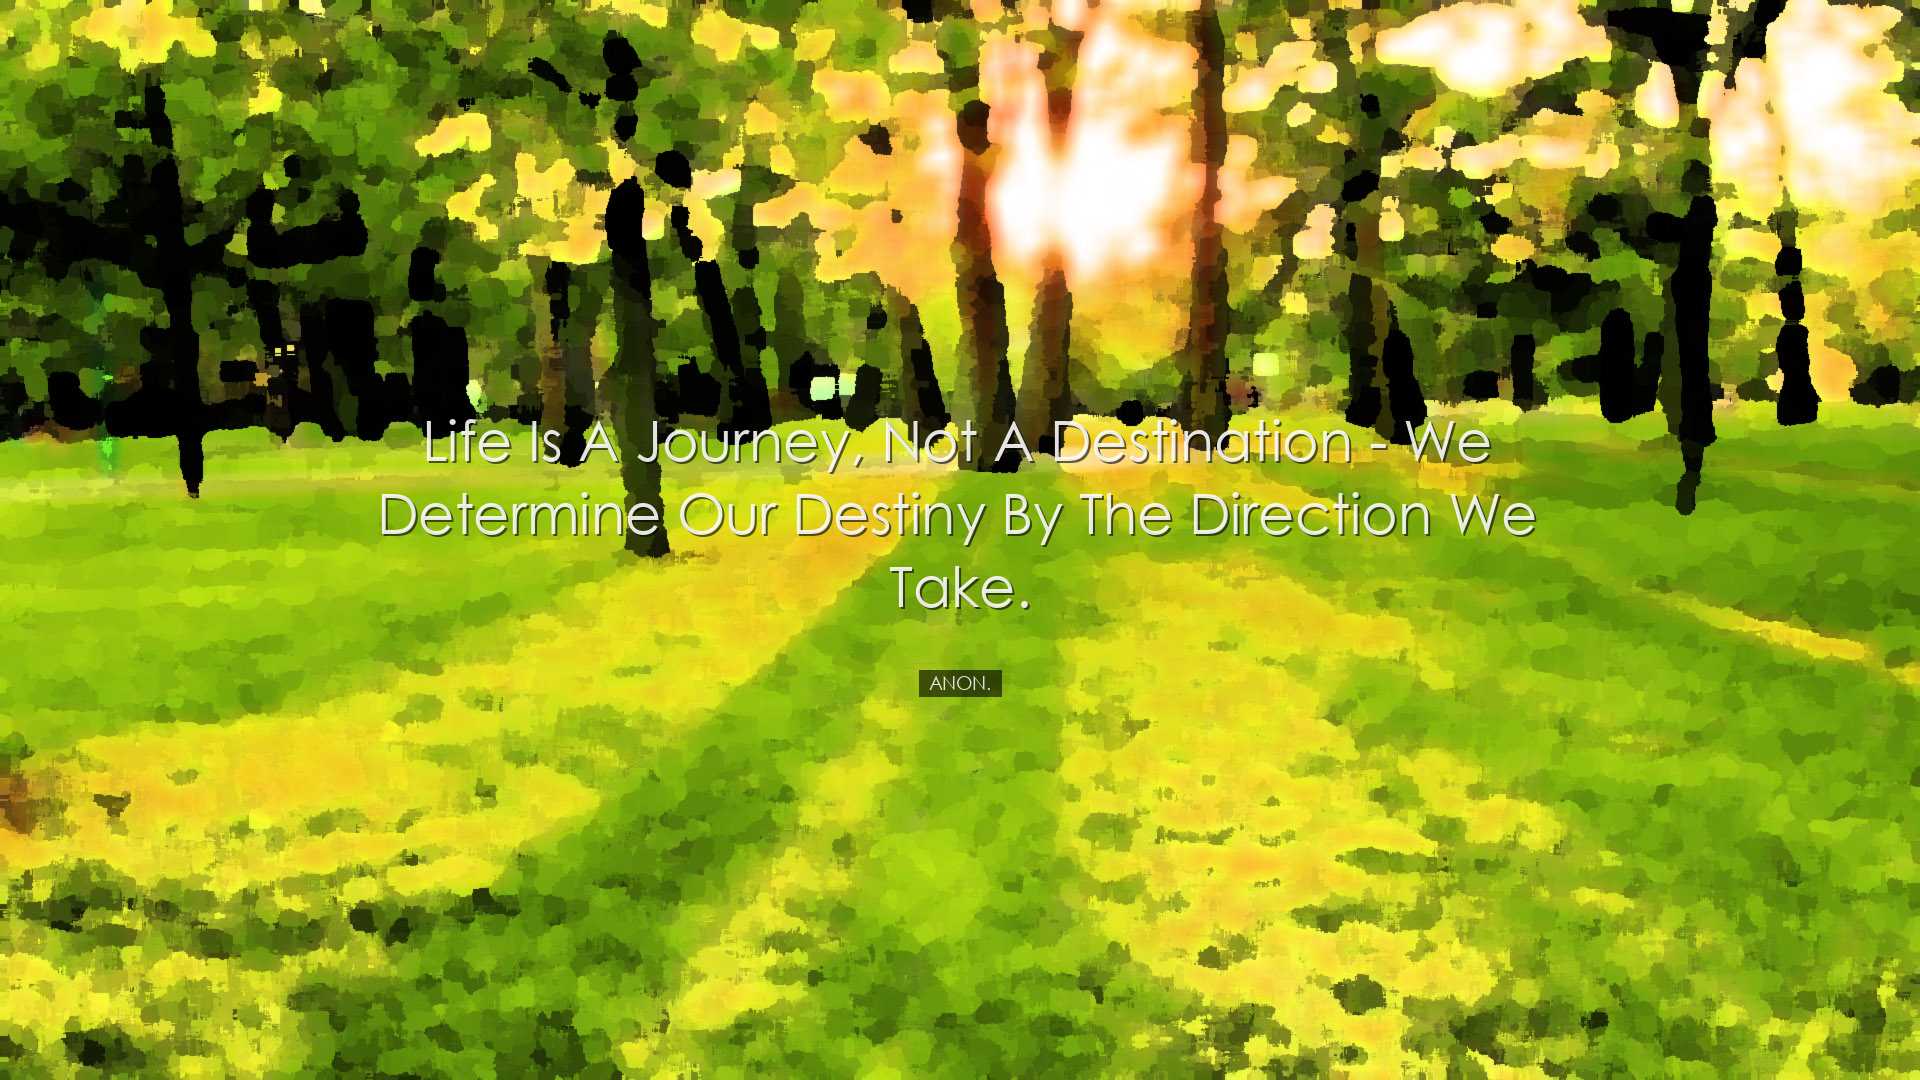 Life is a journey, not a destination - we determine our destiny by